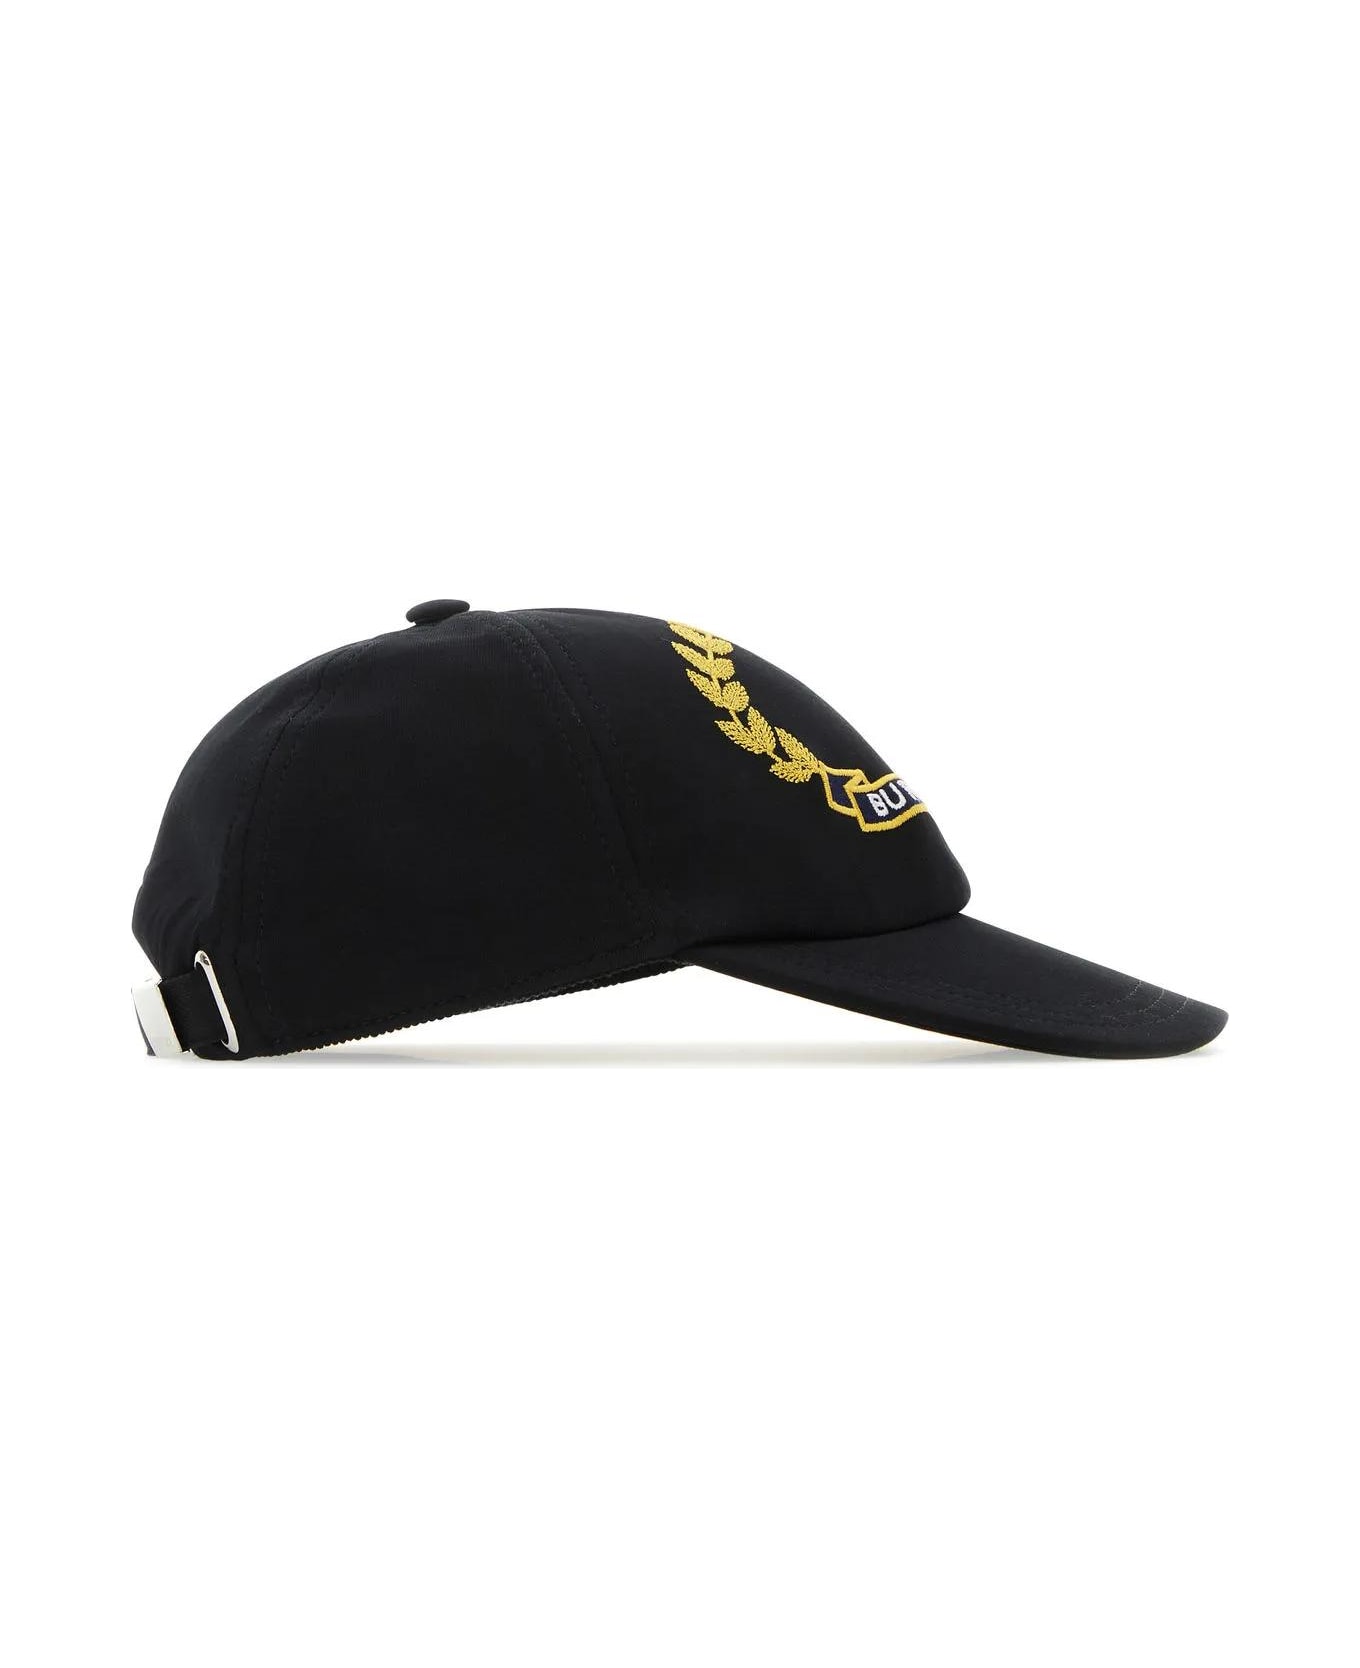 Burberry Black Cotton Baseball Cap - Black 帽子